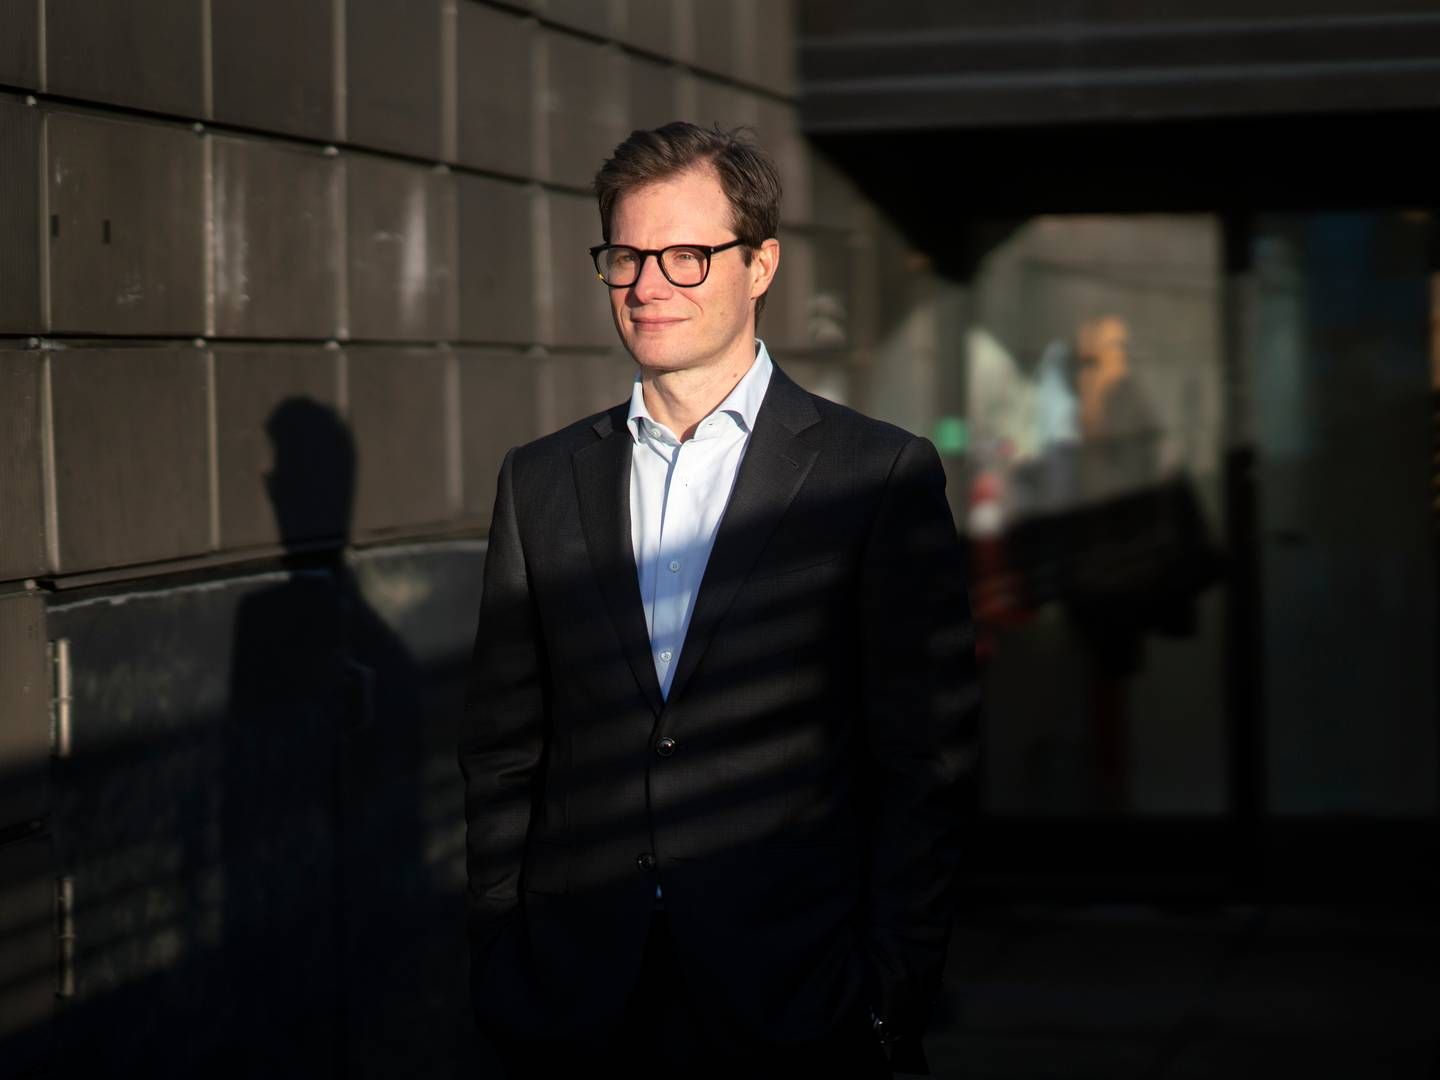 Carsten Egeriis er adm. direktør for Danske Bank, der onsdag har sat ord på en ny strategi for banken.